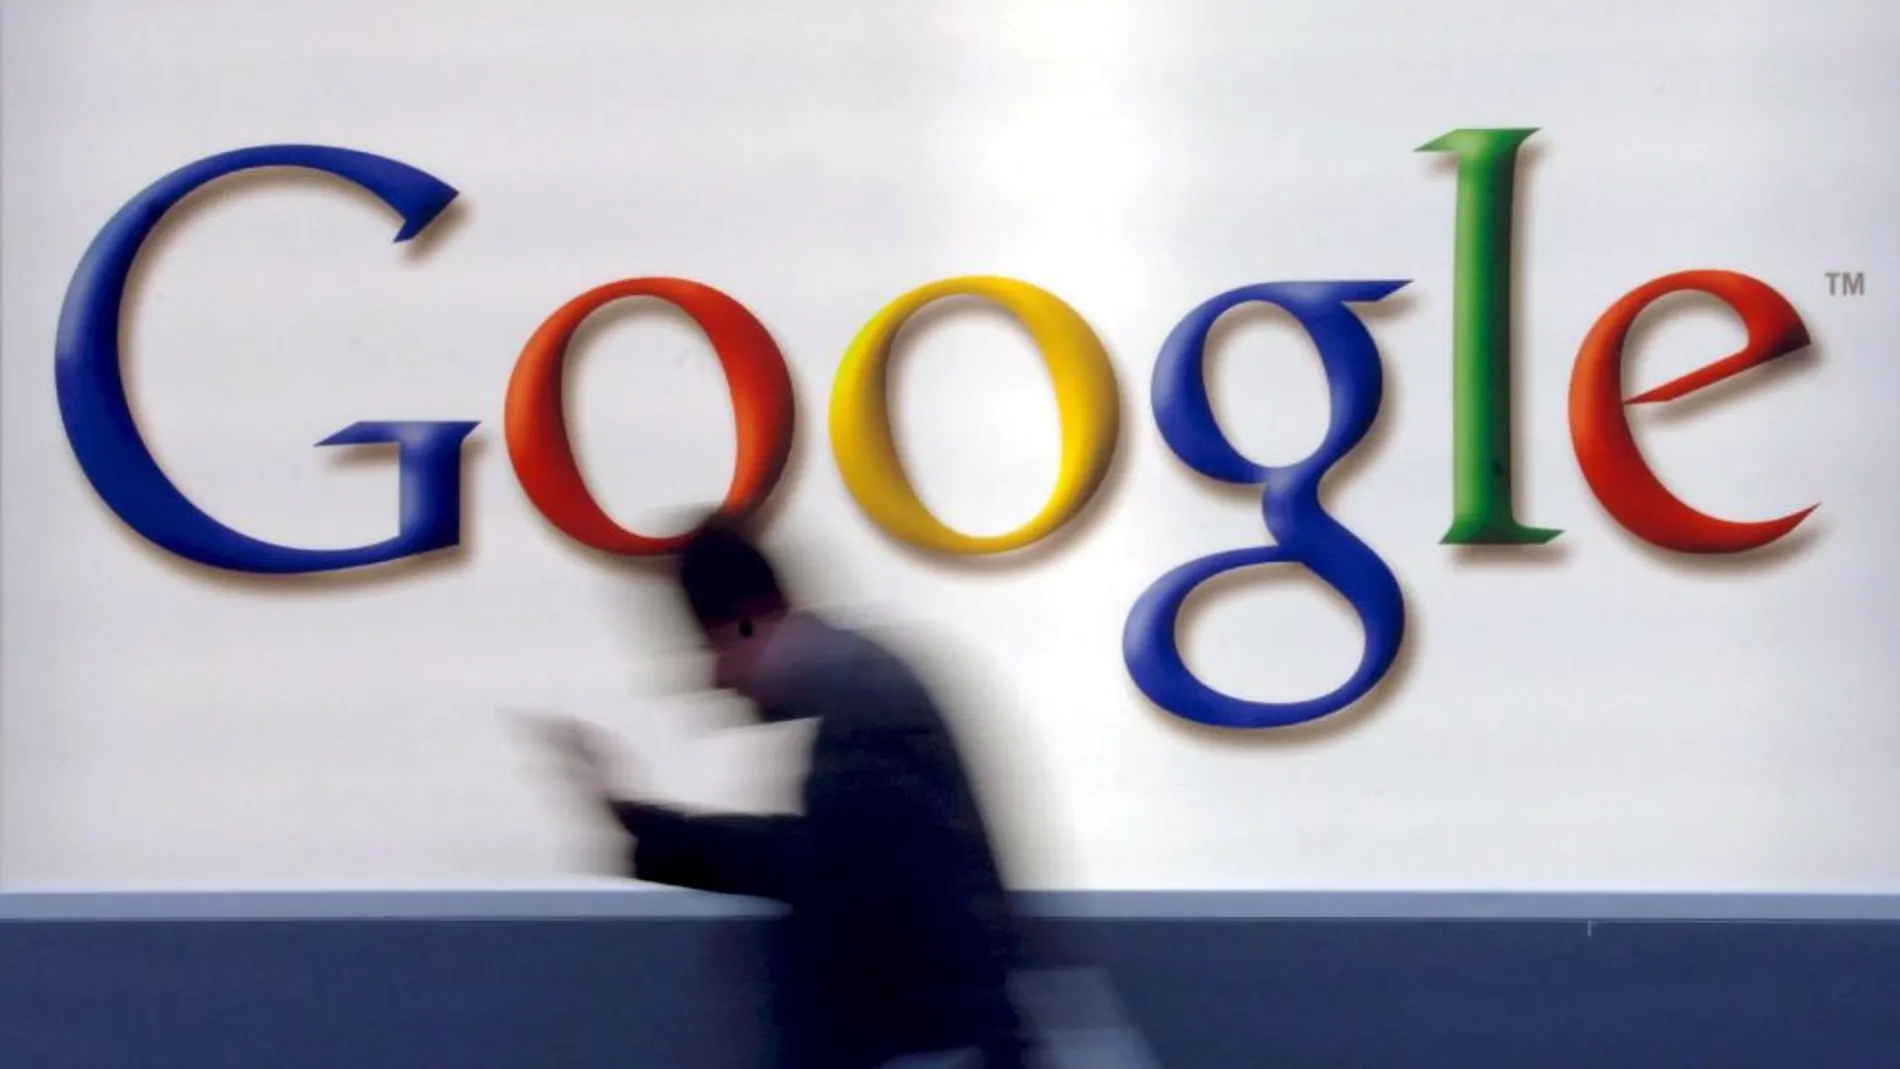 Europa impone una multa histórica a Google de 4.343 millones